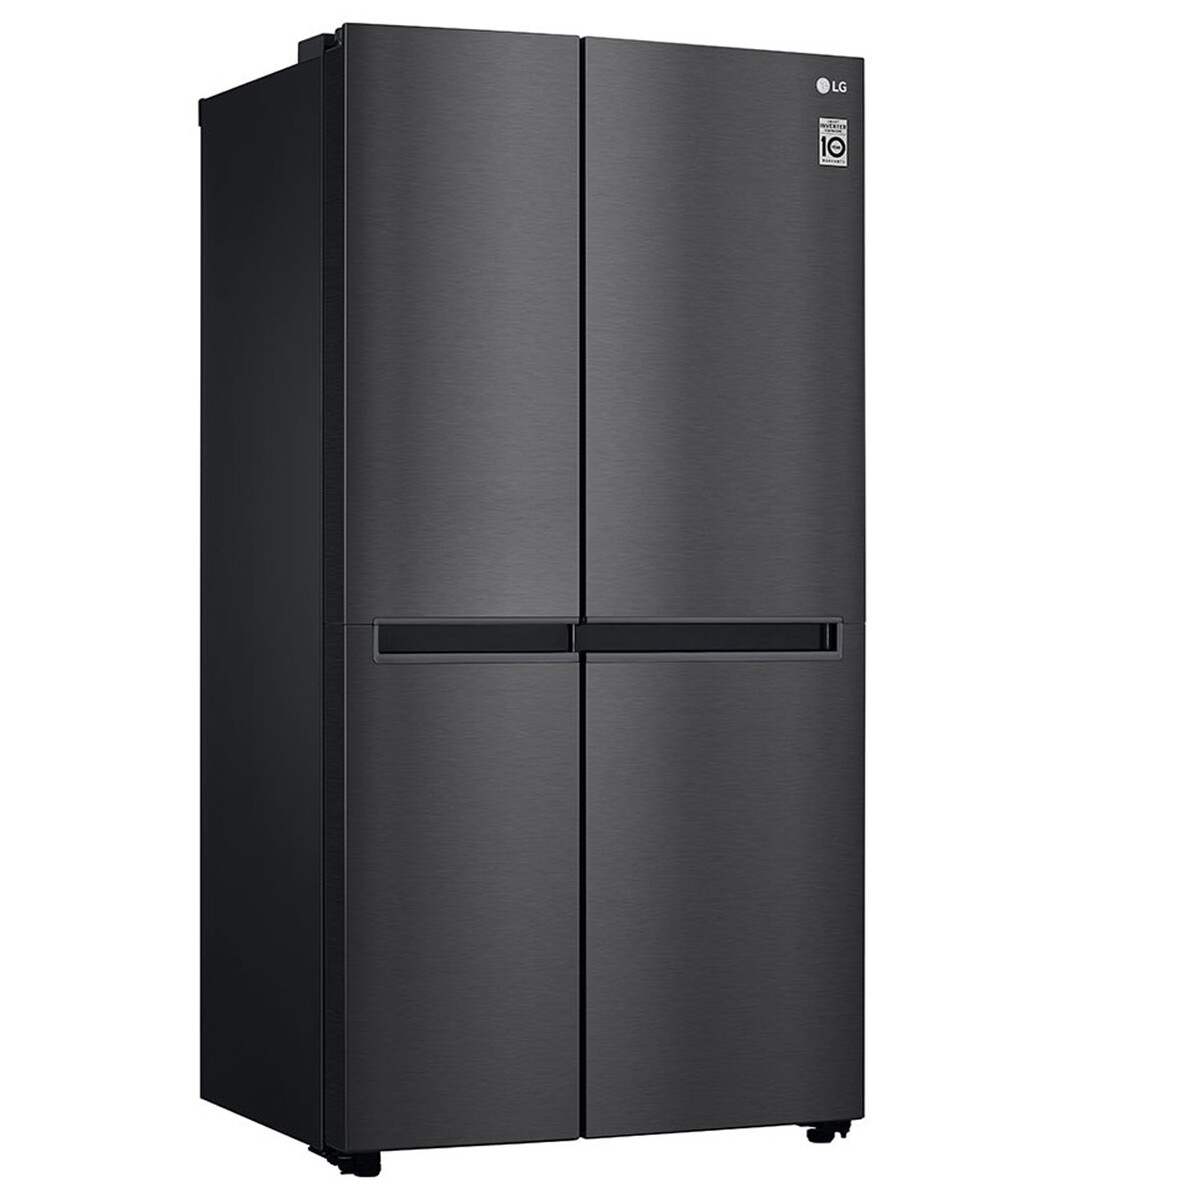 LG Side by Side Refrigerator GC-B257KQBV 688L